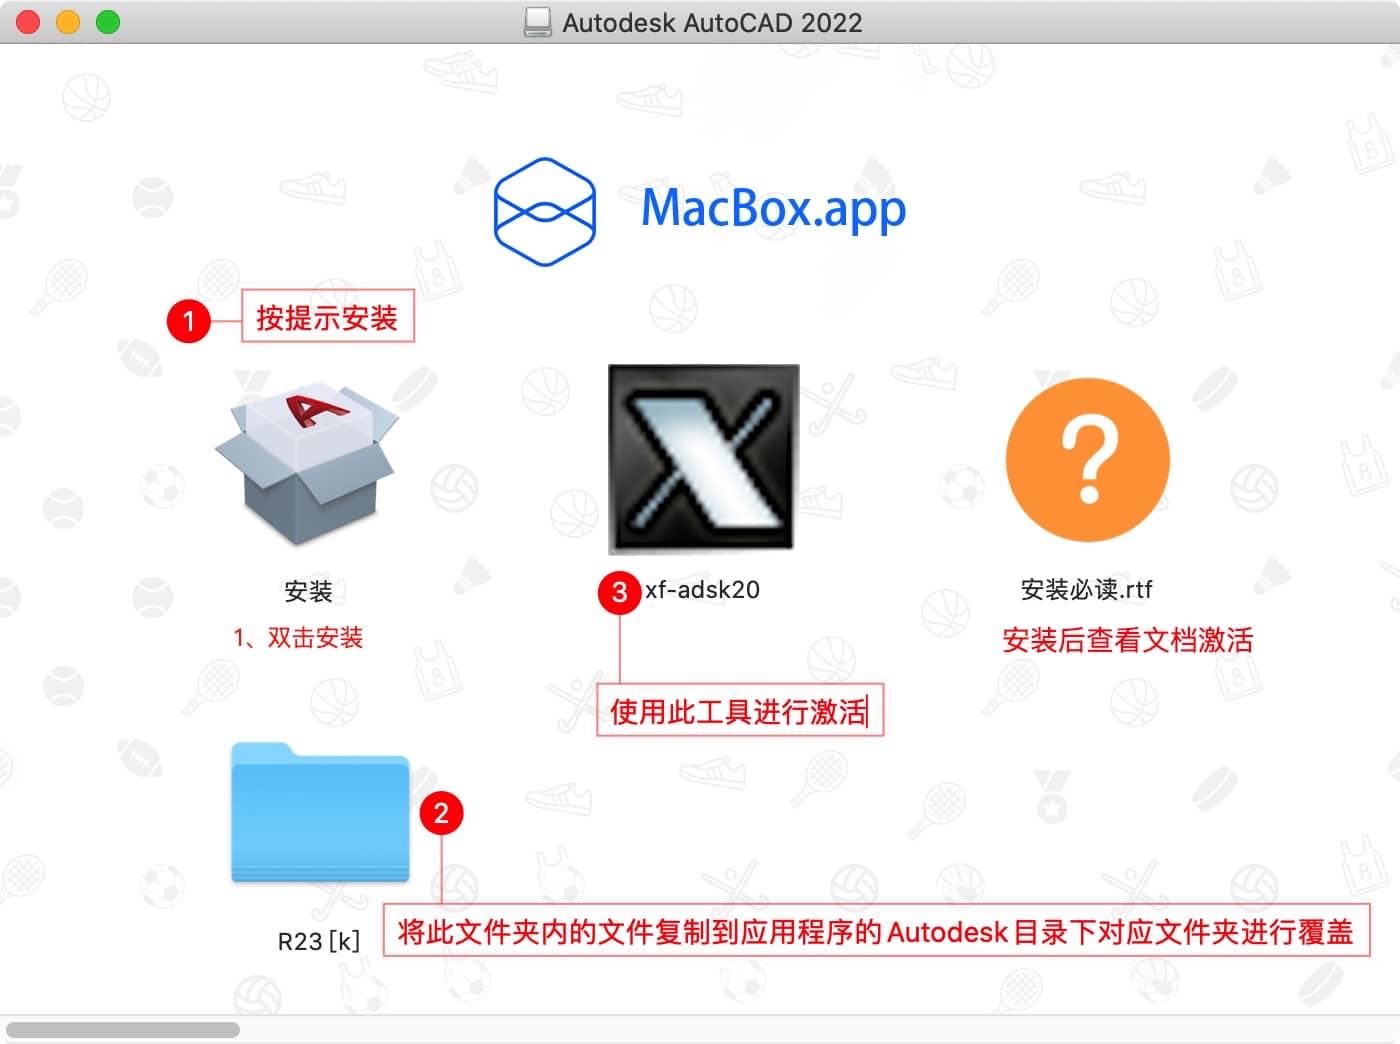 AutoCAD 2022 for mac 下载